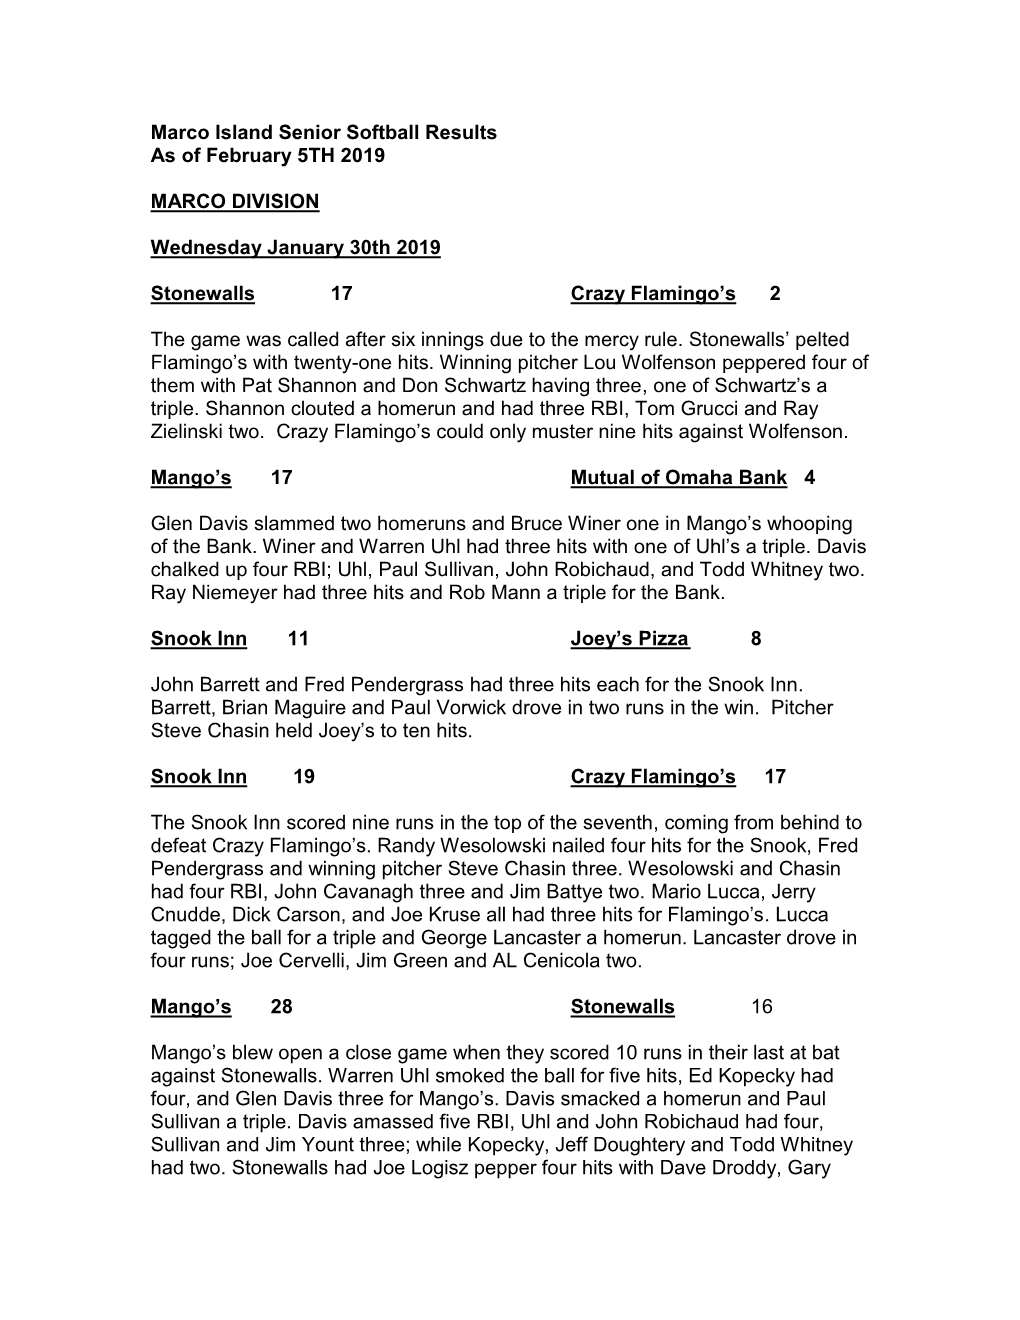 Marco Island Senior Softball Results As of February 5TH 2019